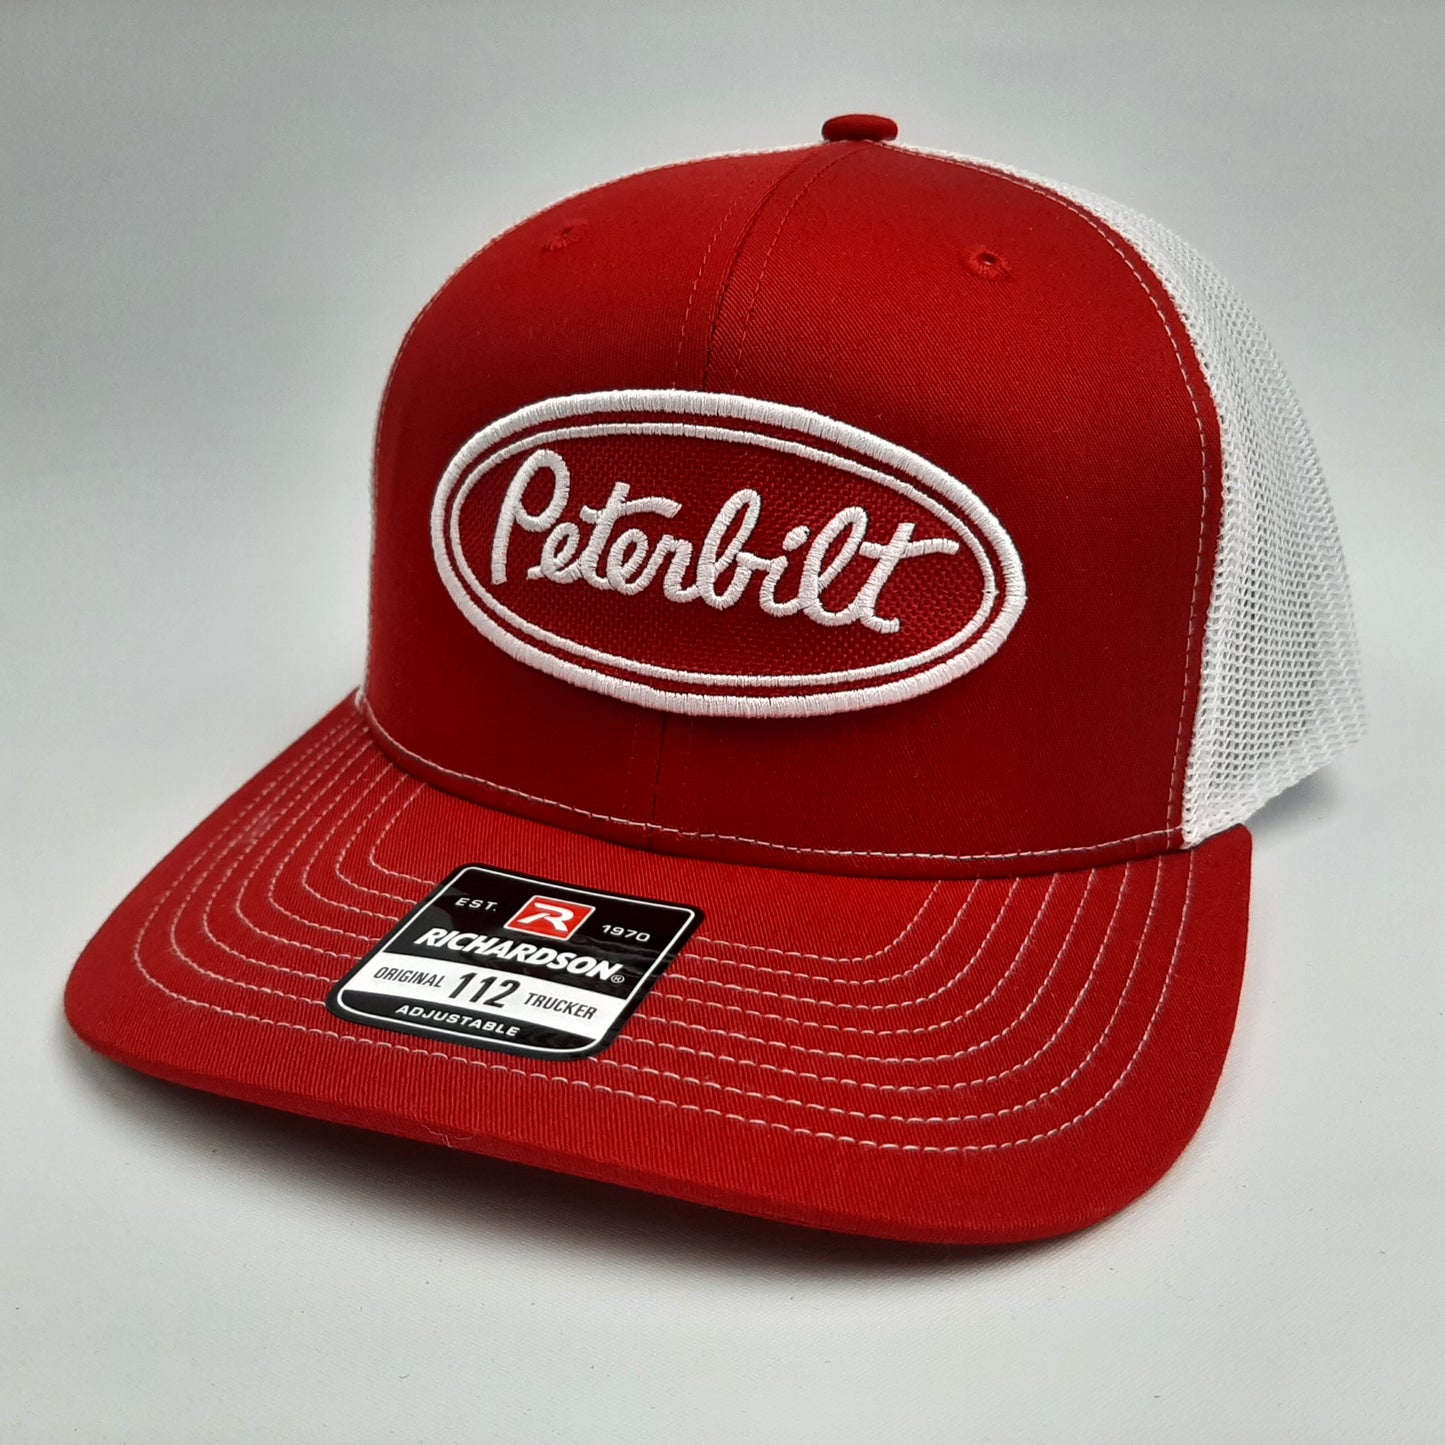 Peterbilt Richardson 112 Trucker Mesh snapback Hat Cap Red